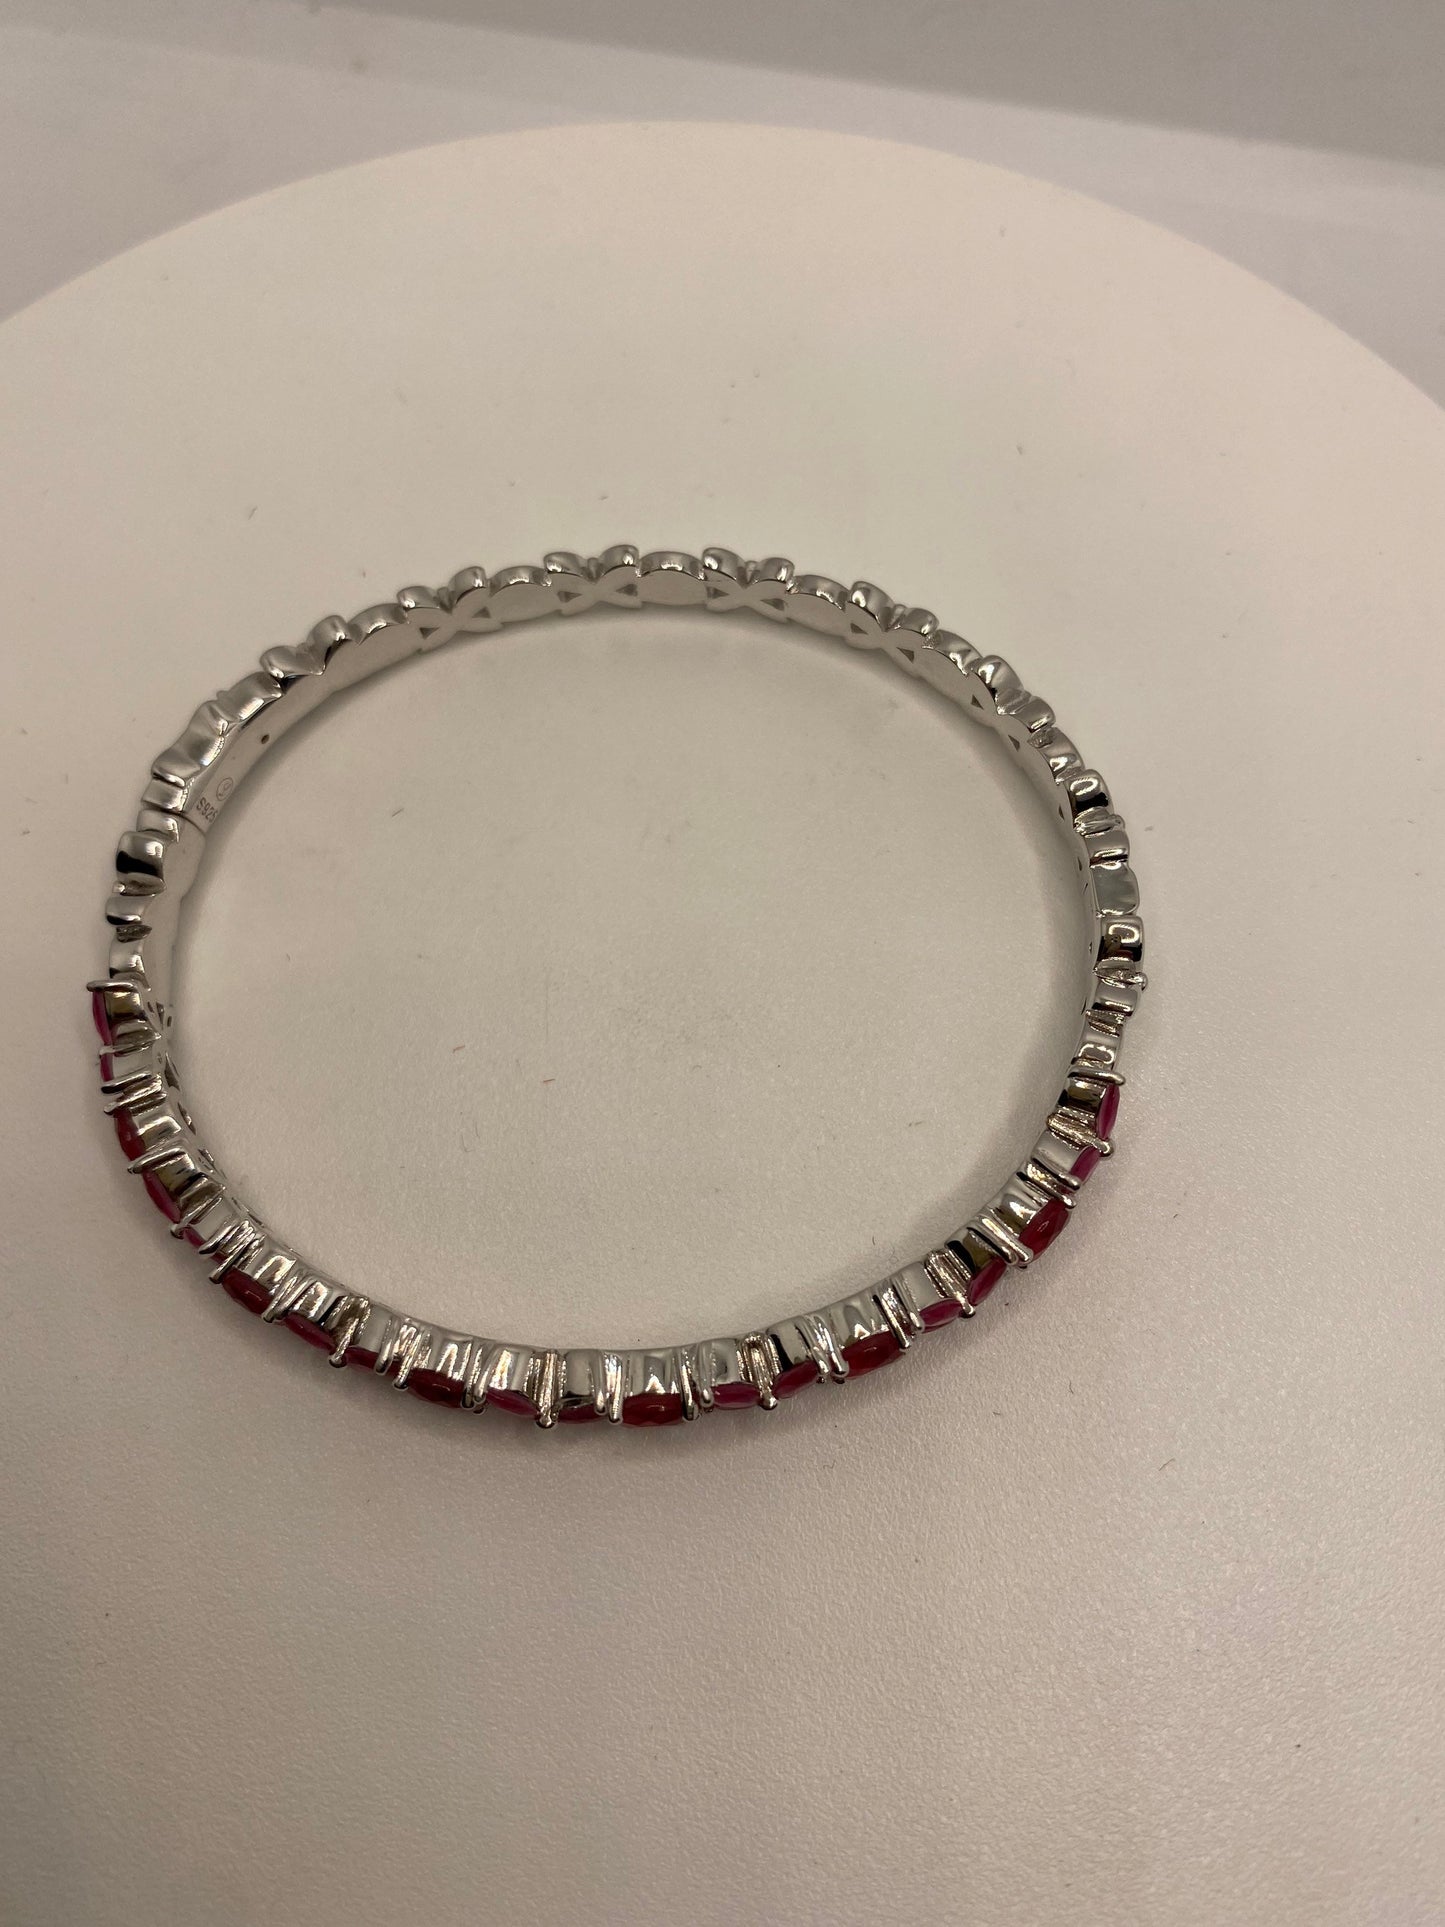 Vintage Red Ruby Onyx Bangle Bracelet 925 Sterling Silver